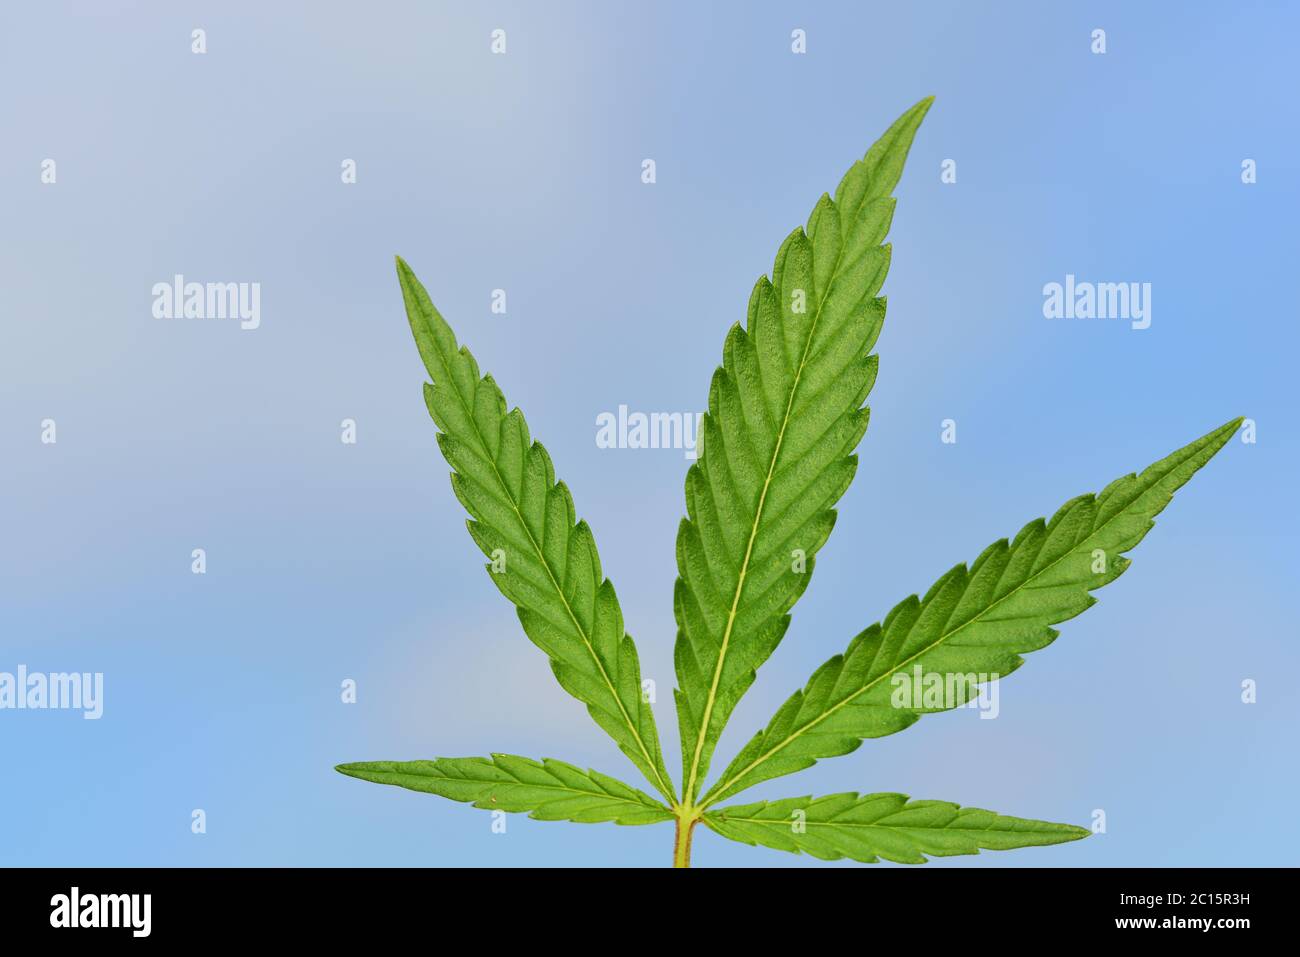 A fresh green leaf of the cannabis plant against a blue sky Stock Photo